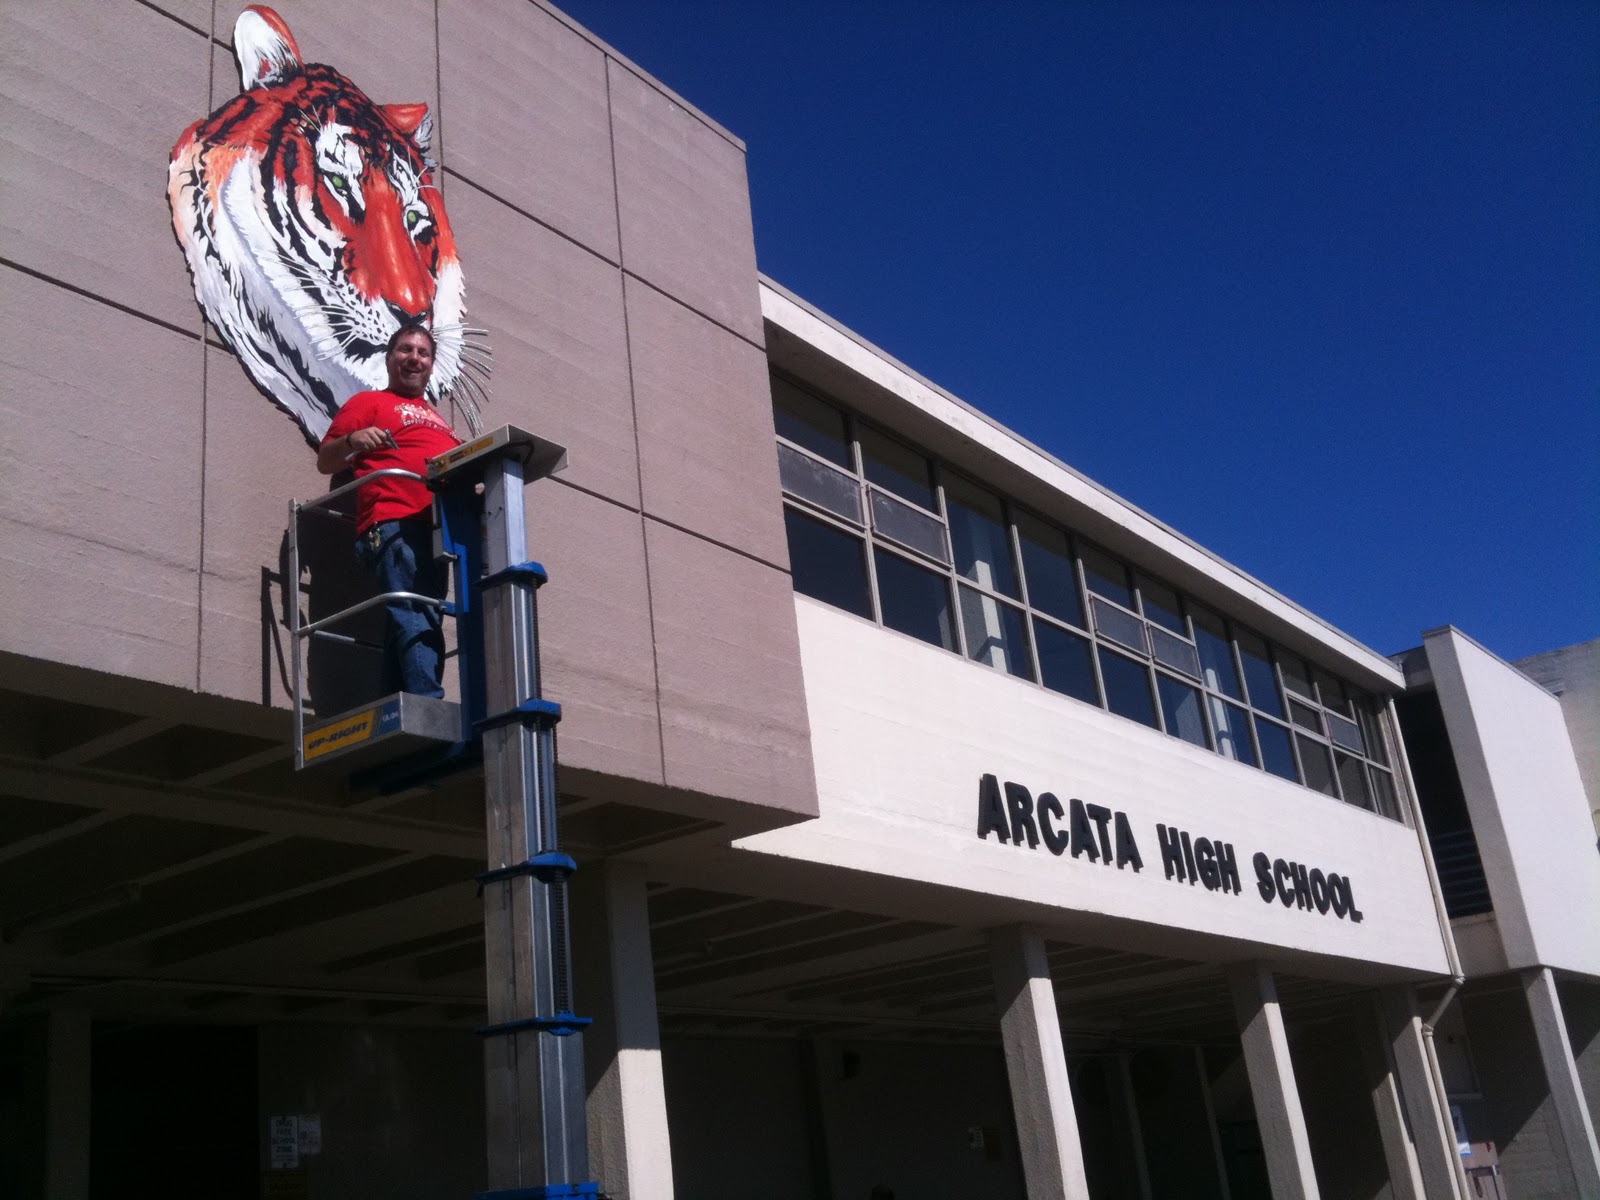 The Art of Donovan Clark: I painted the Arcata High School mascot/logo